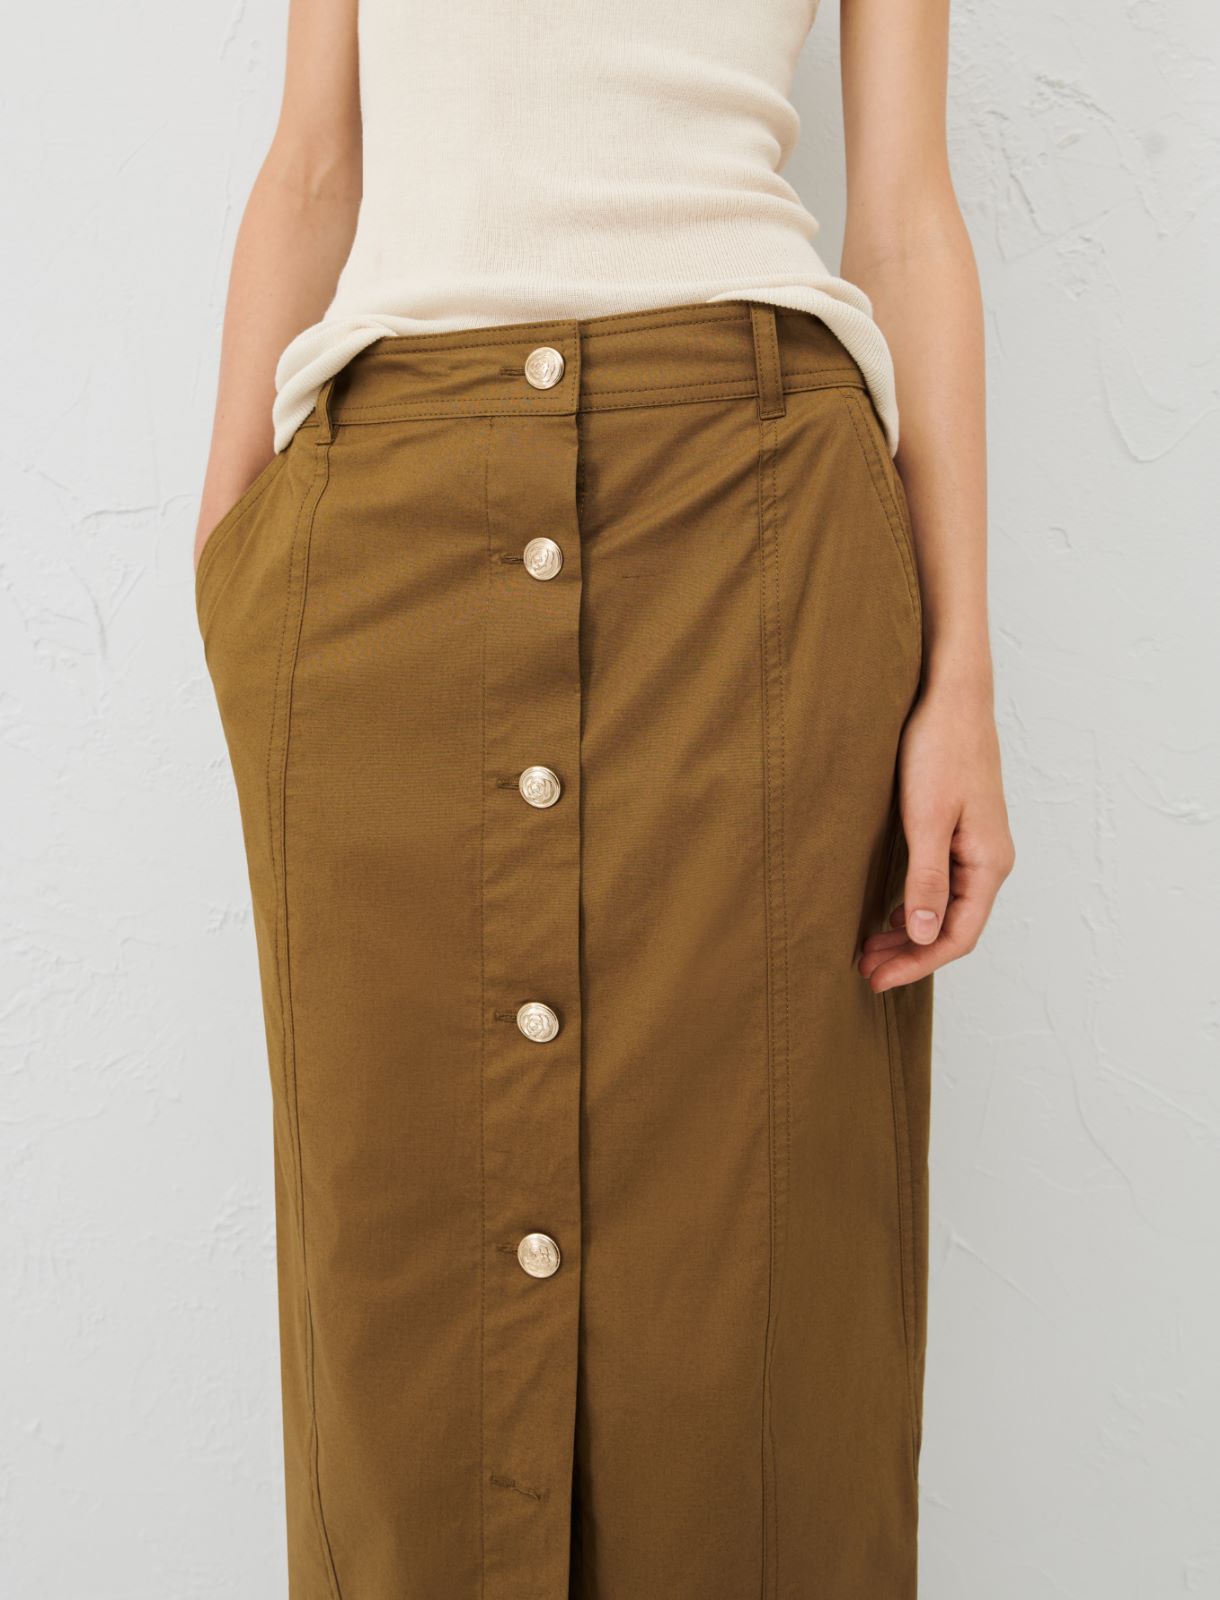 Štepalica: Zlata skirt sewalong: #13 Sew the button closure